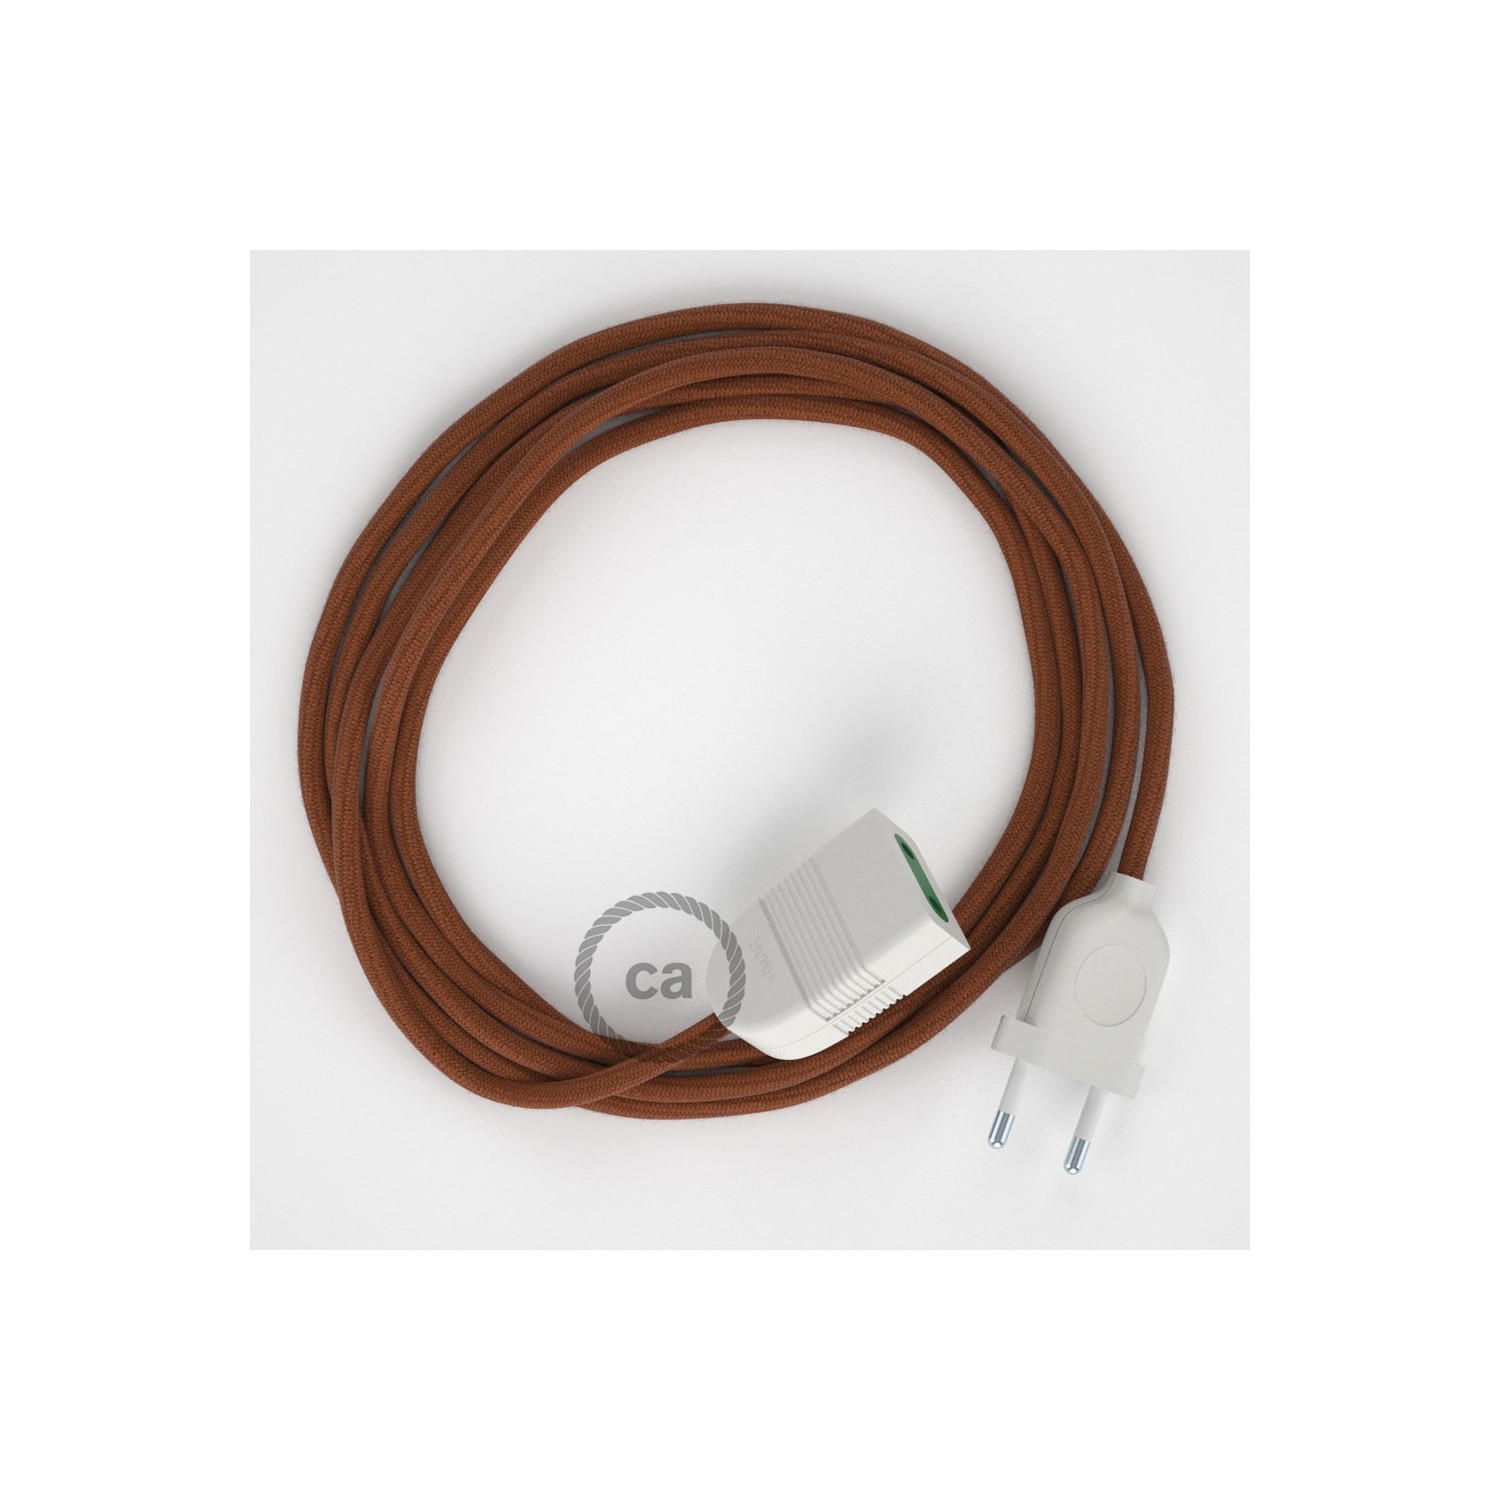 Produžni kabel za napajanje (2P 10A) Jelenje Smeđi Pamuk RC23 - Made in Italy